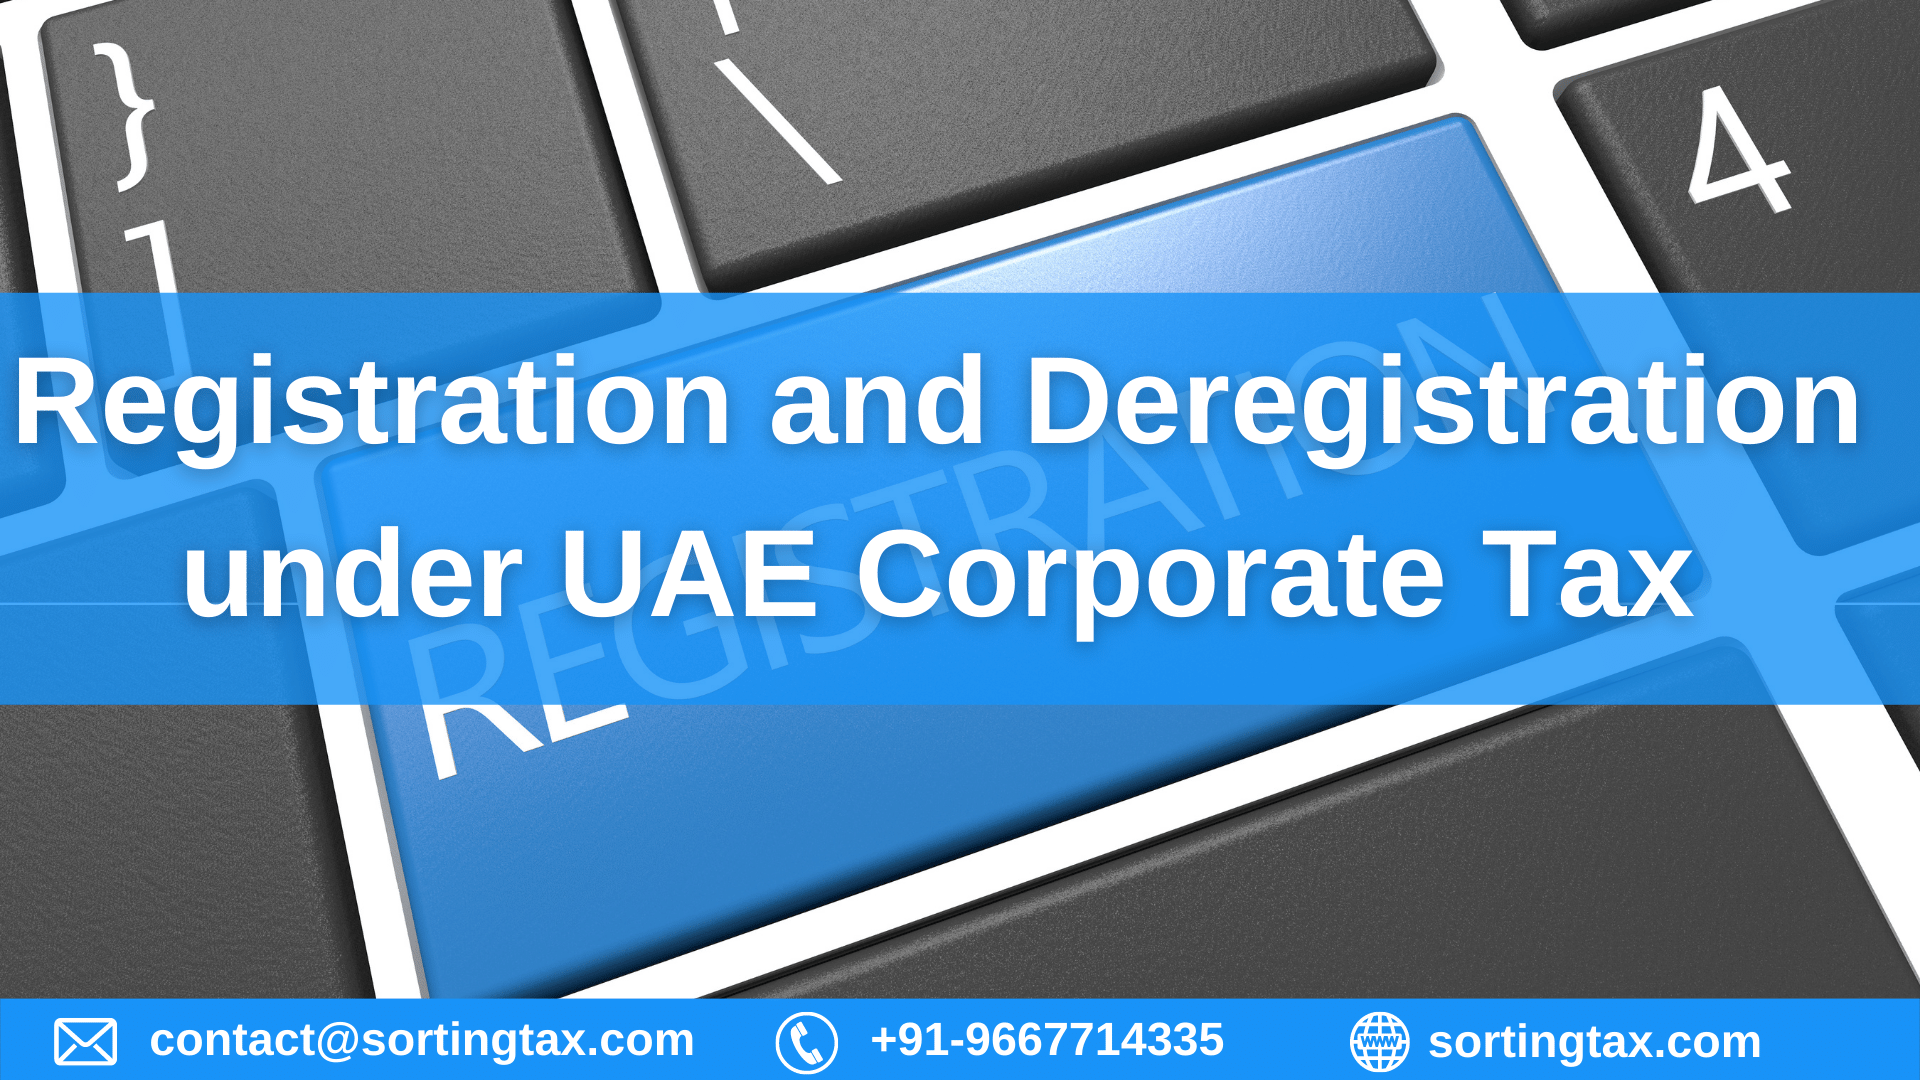 Registration and Deregistration under UAE Corporate Tax